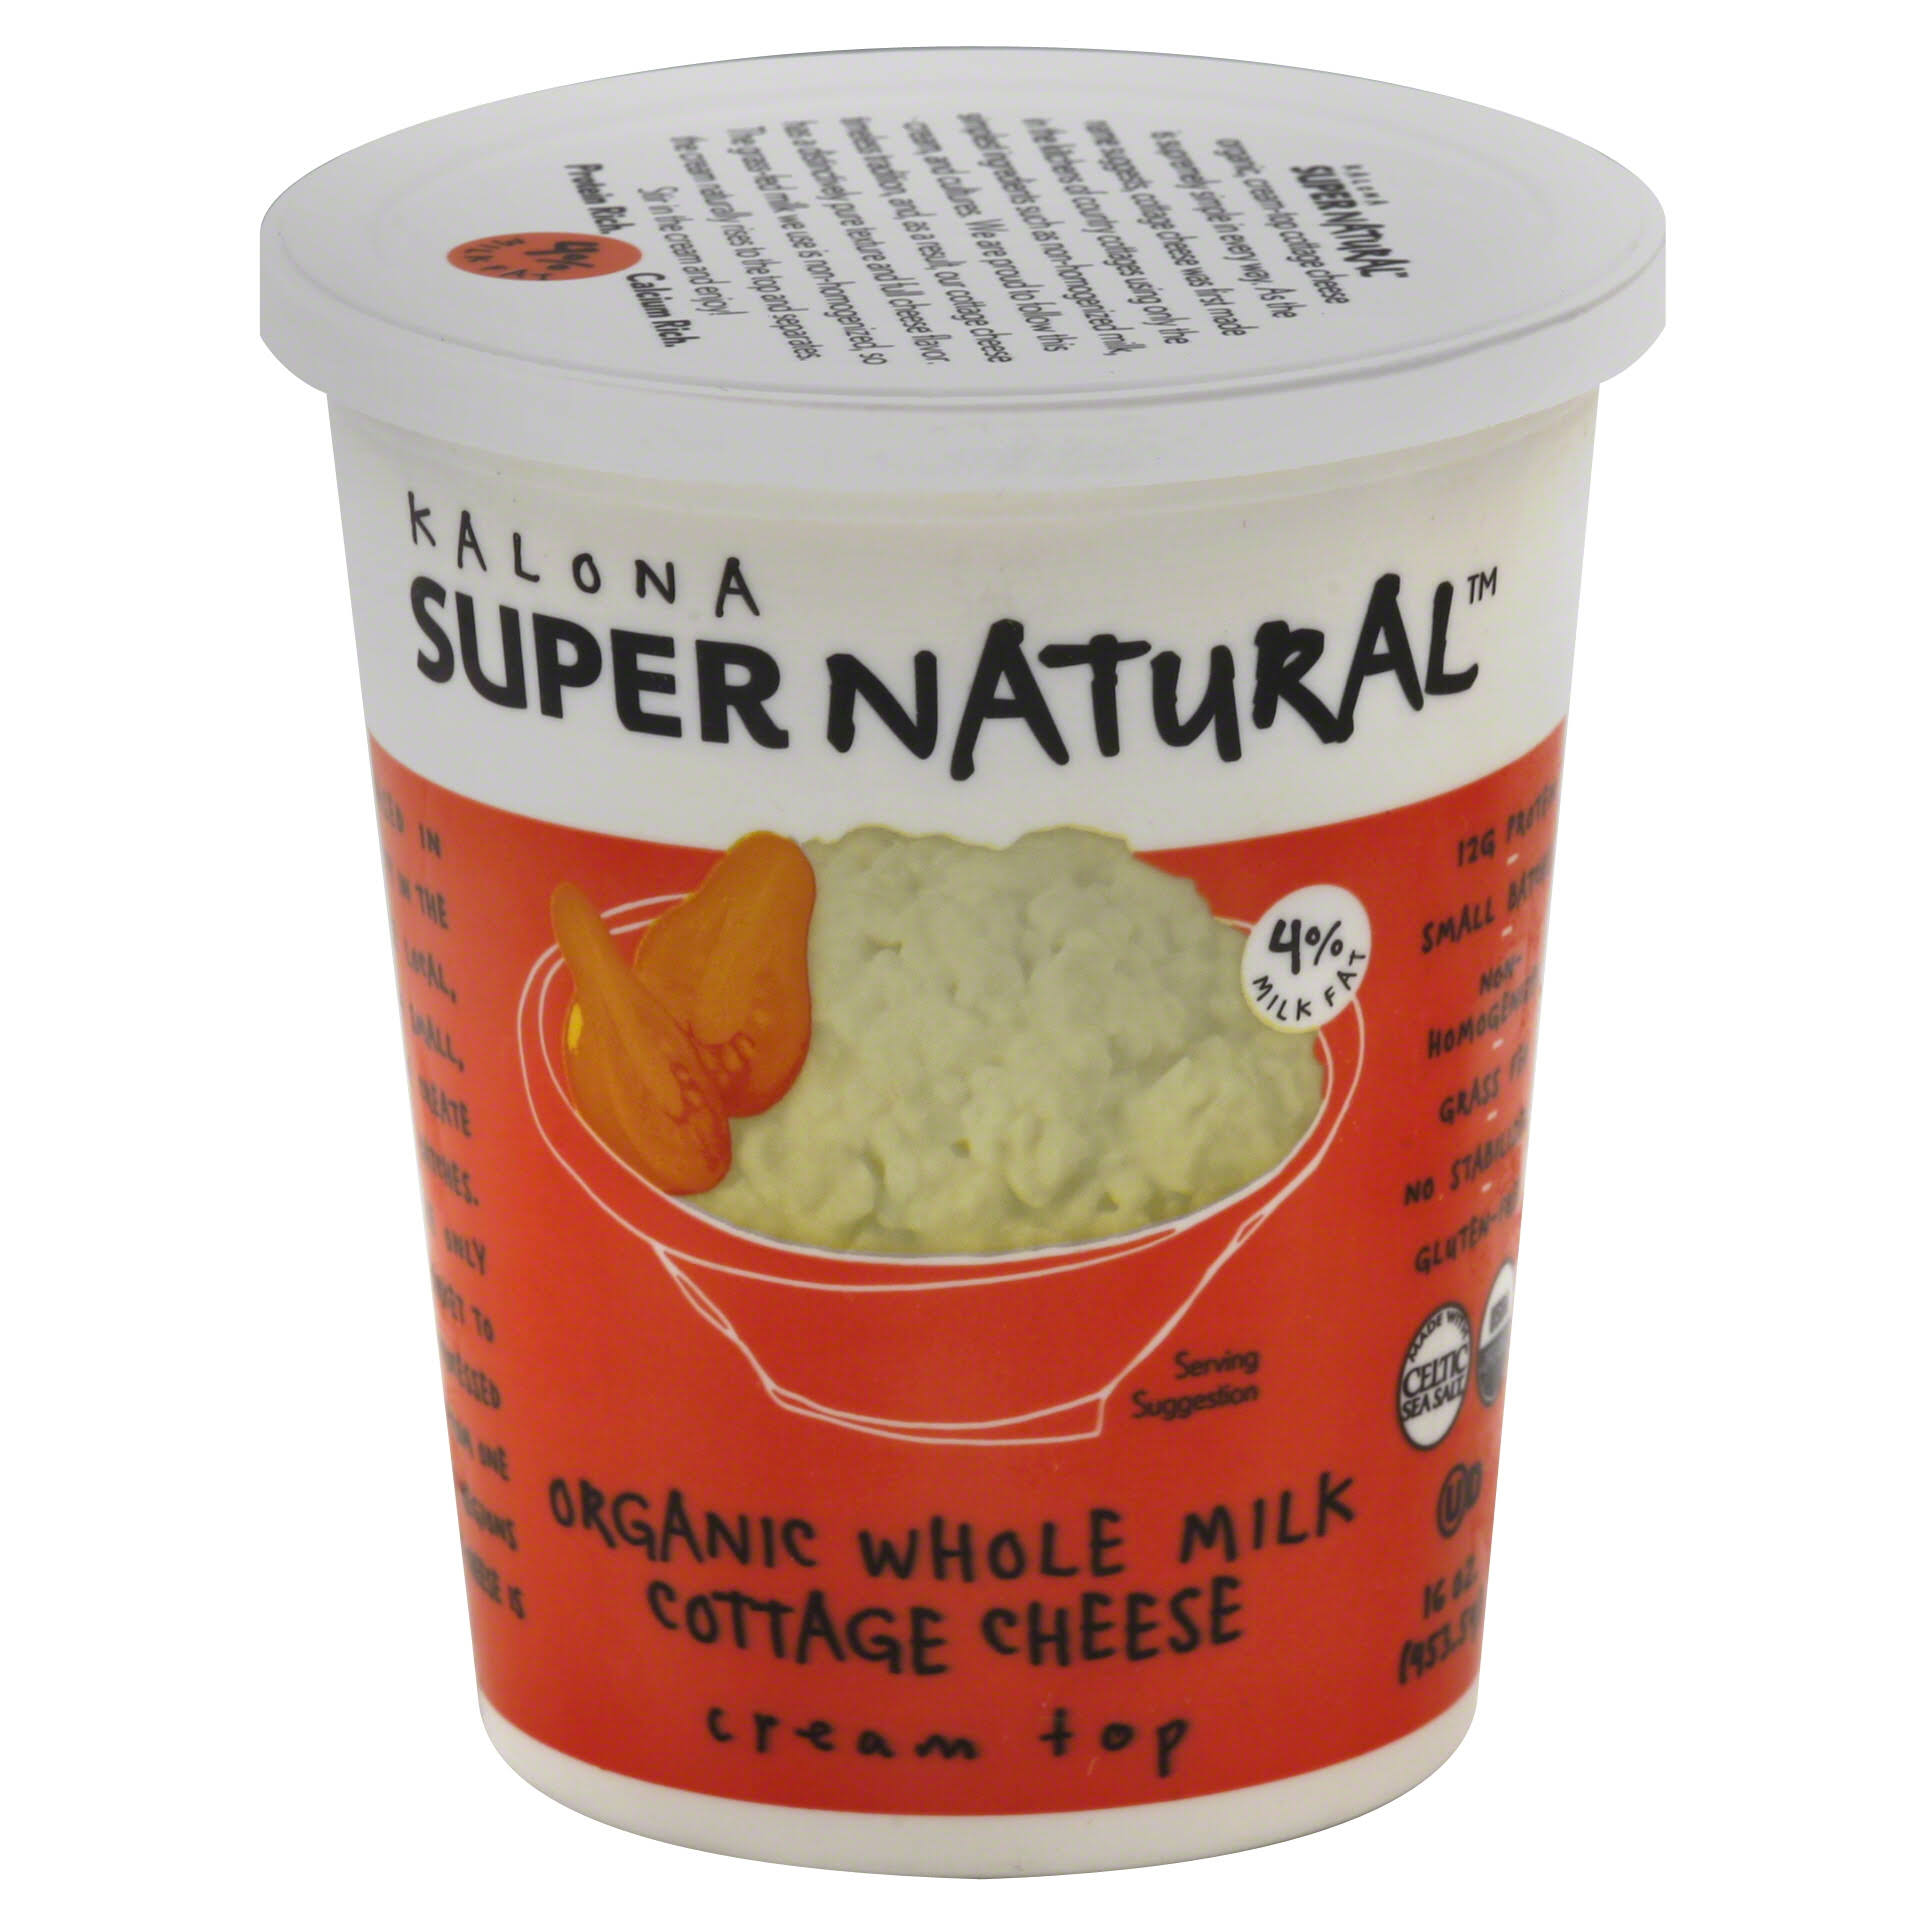 Kalona Super Natural Organic Whole Milk Cottage Cheese